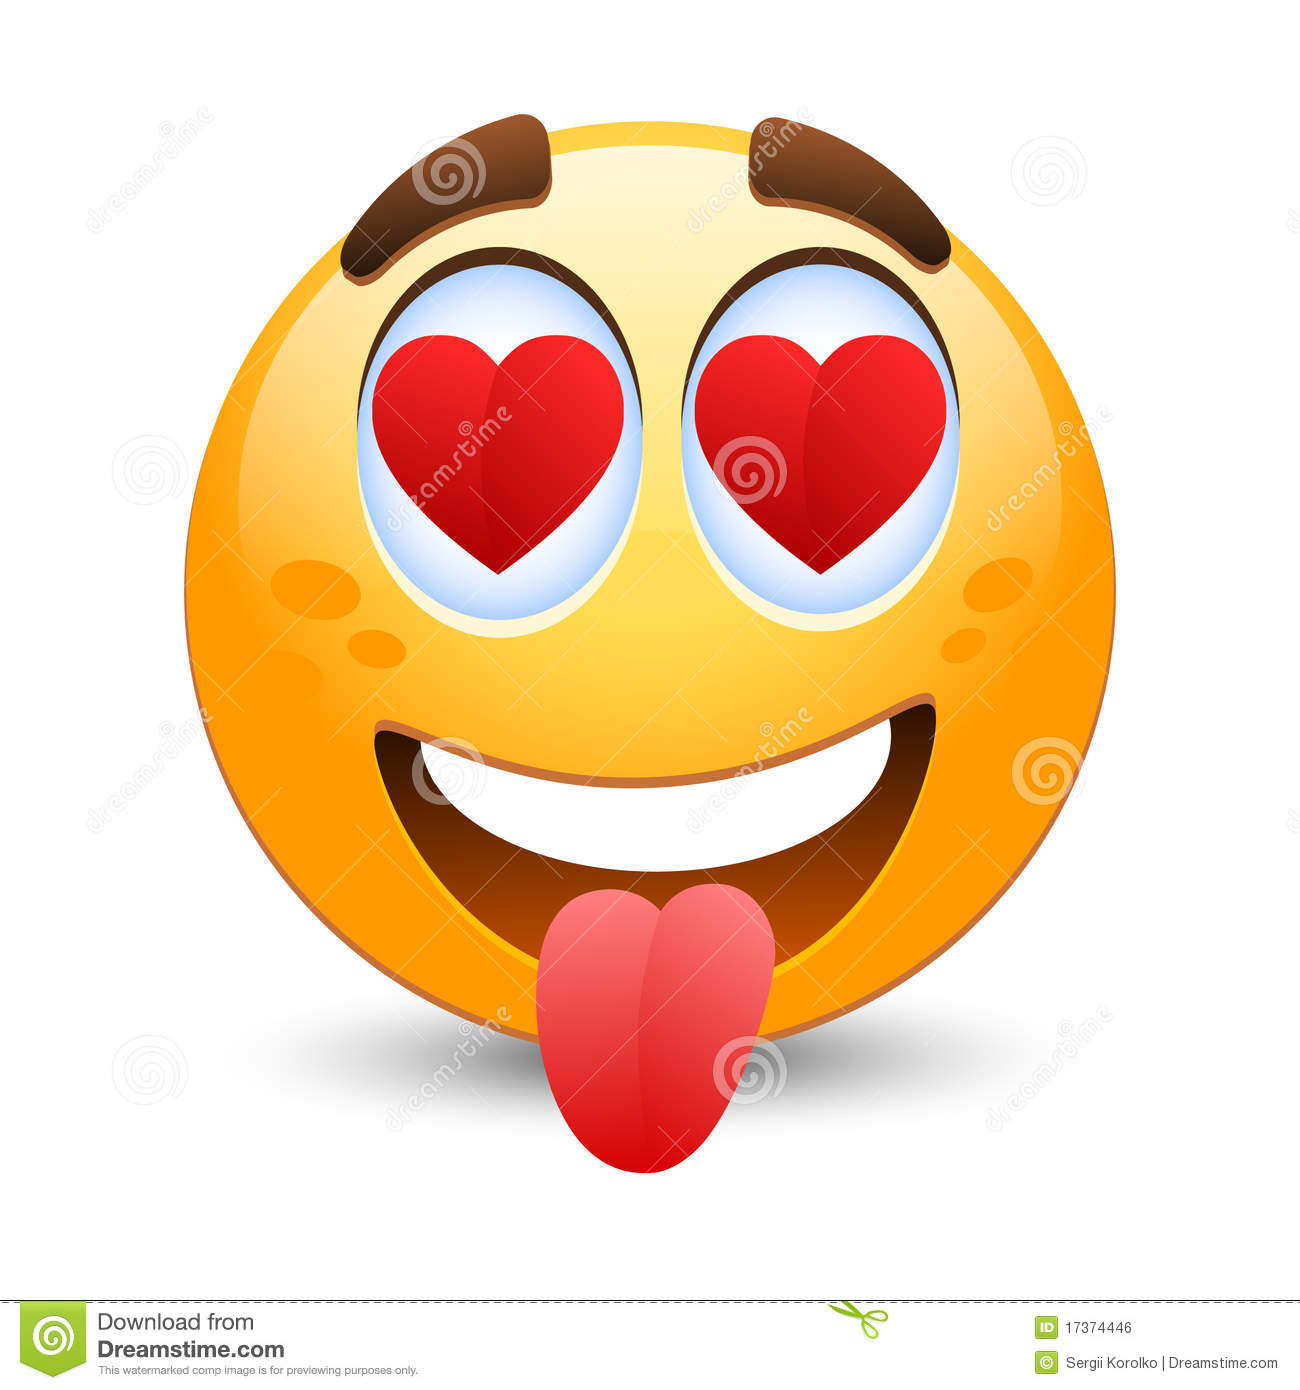 Vector Emoticon In Love Royalty Free Stock Image   Image  17374446